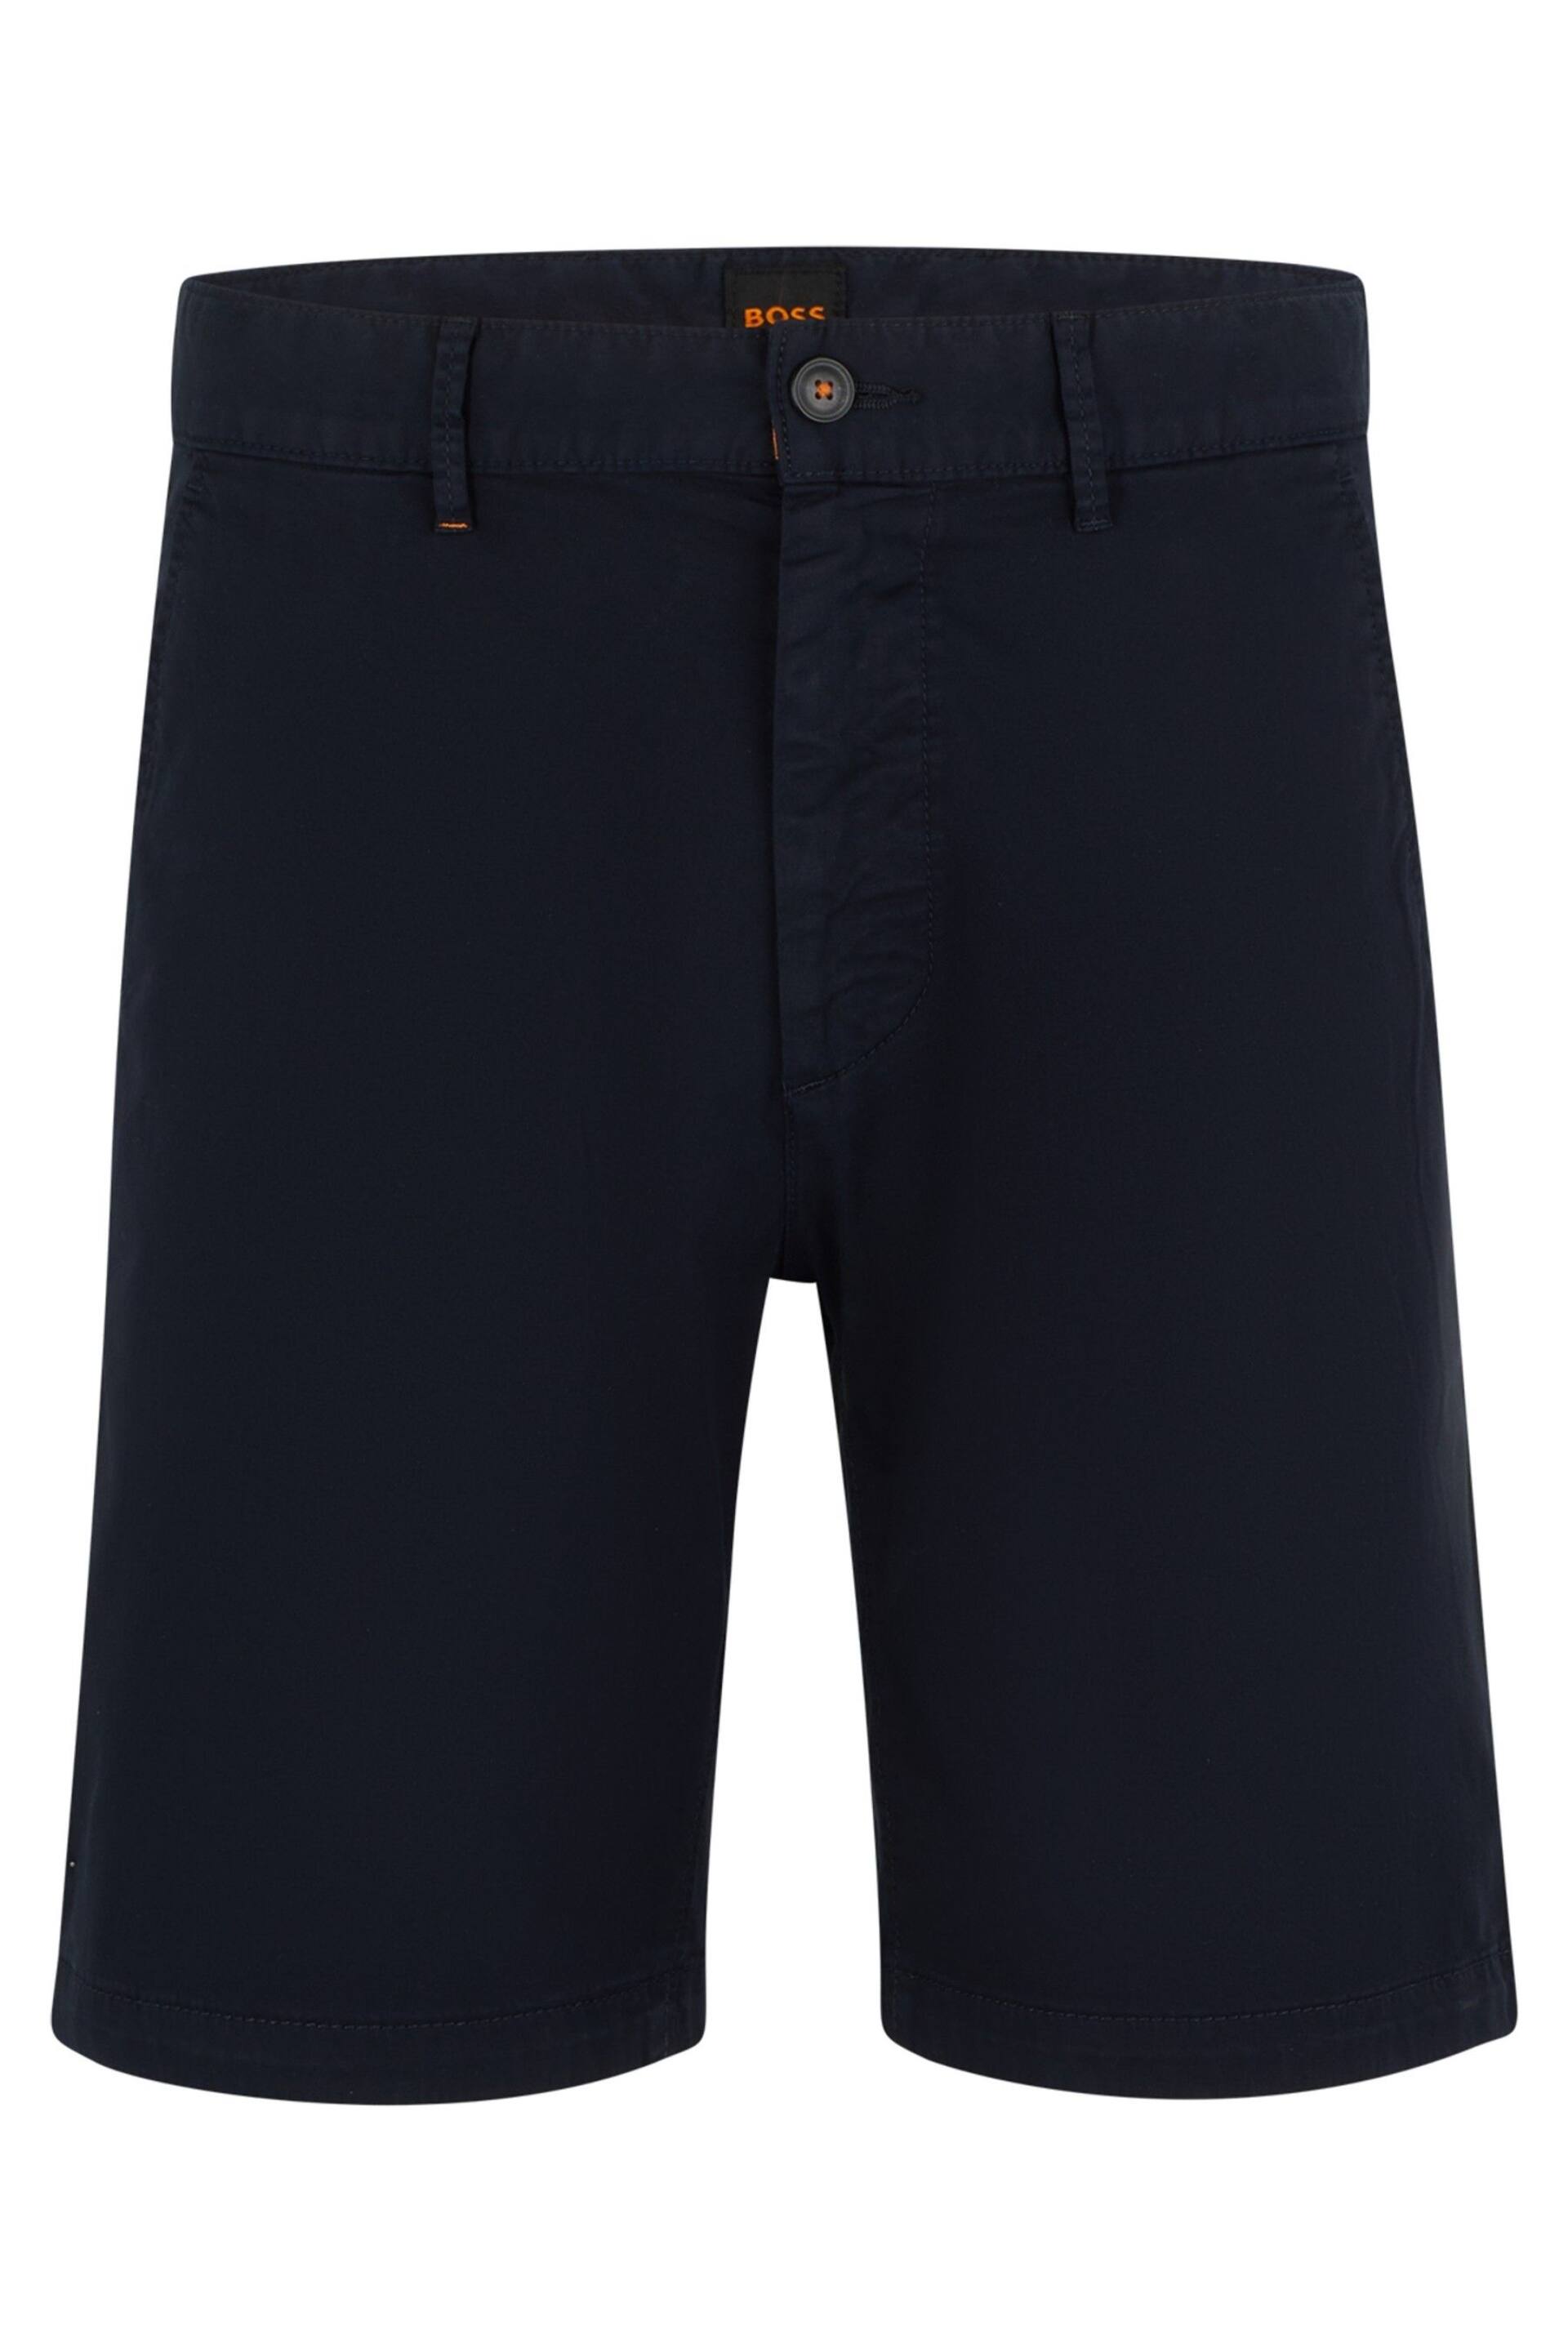 BOSS Drak Blue Slim Fit Stretch Cotton Chino Shorts - Image 5 of 5